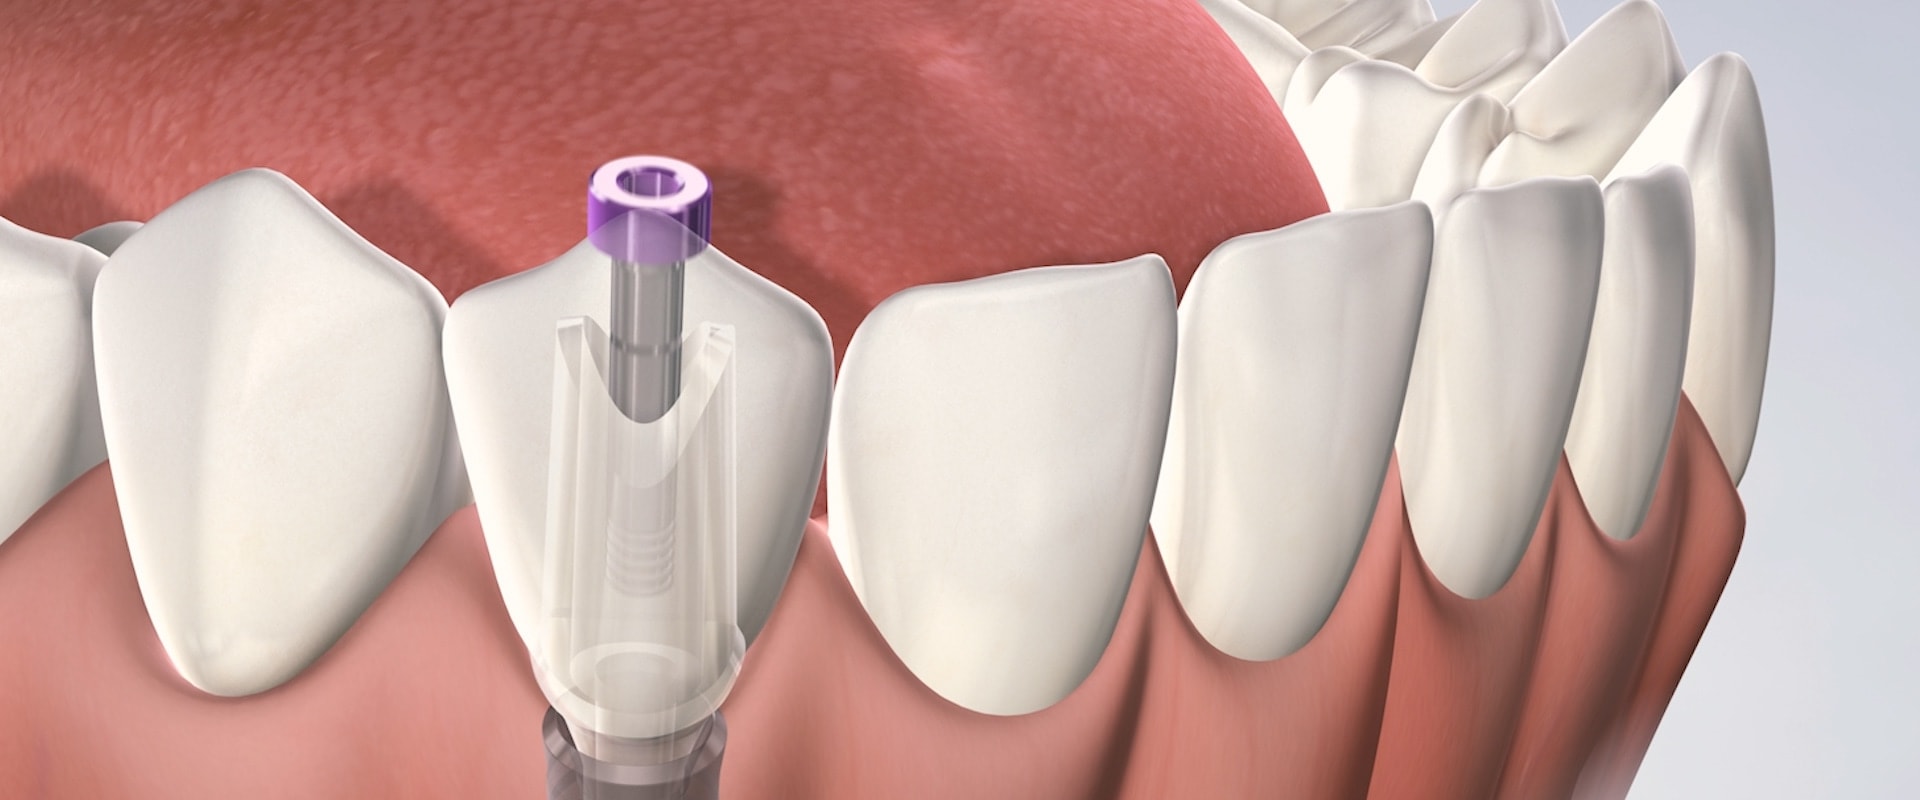 Why dental implants hurt?